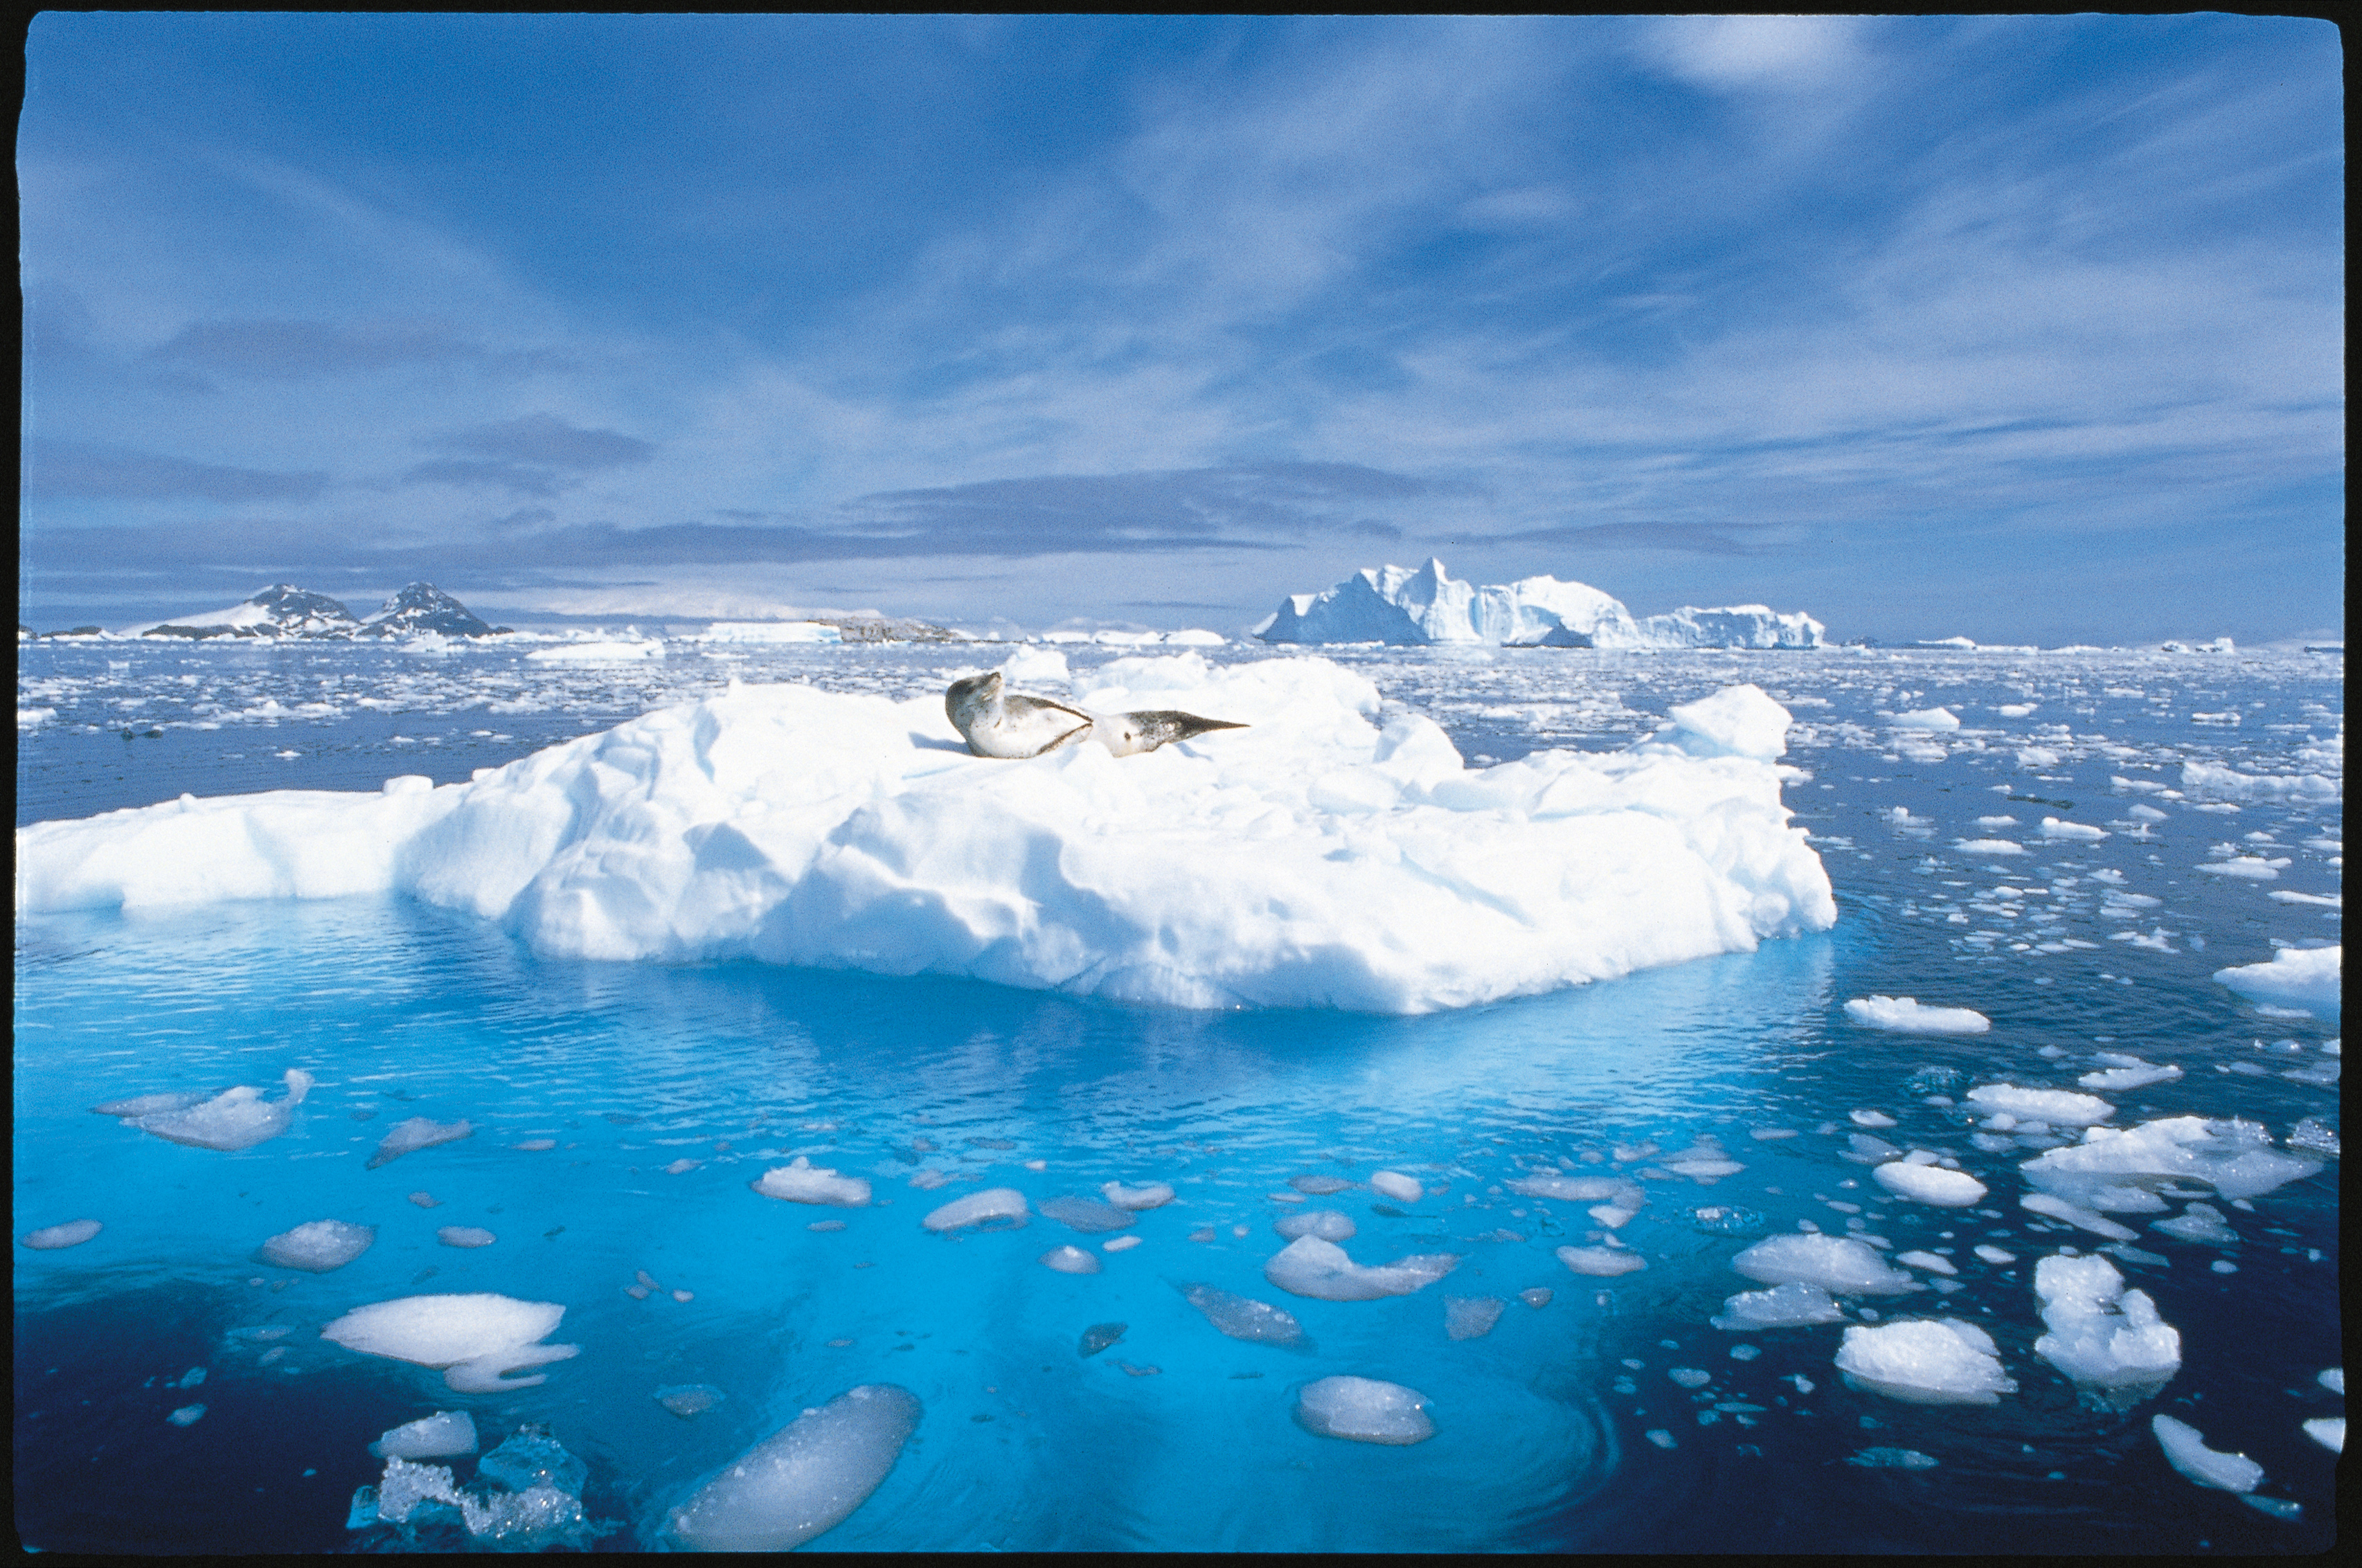 Про ледовитый океан. Арктика Северный Ледовитый океан. Северный полюс Северный Ледовитый океан. Арктика Северо Ледовитого океана. Северный полюс Арктика.